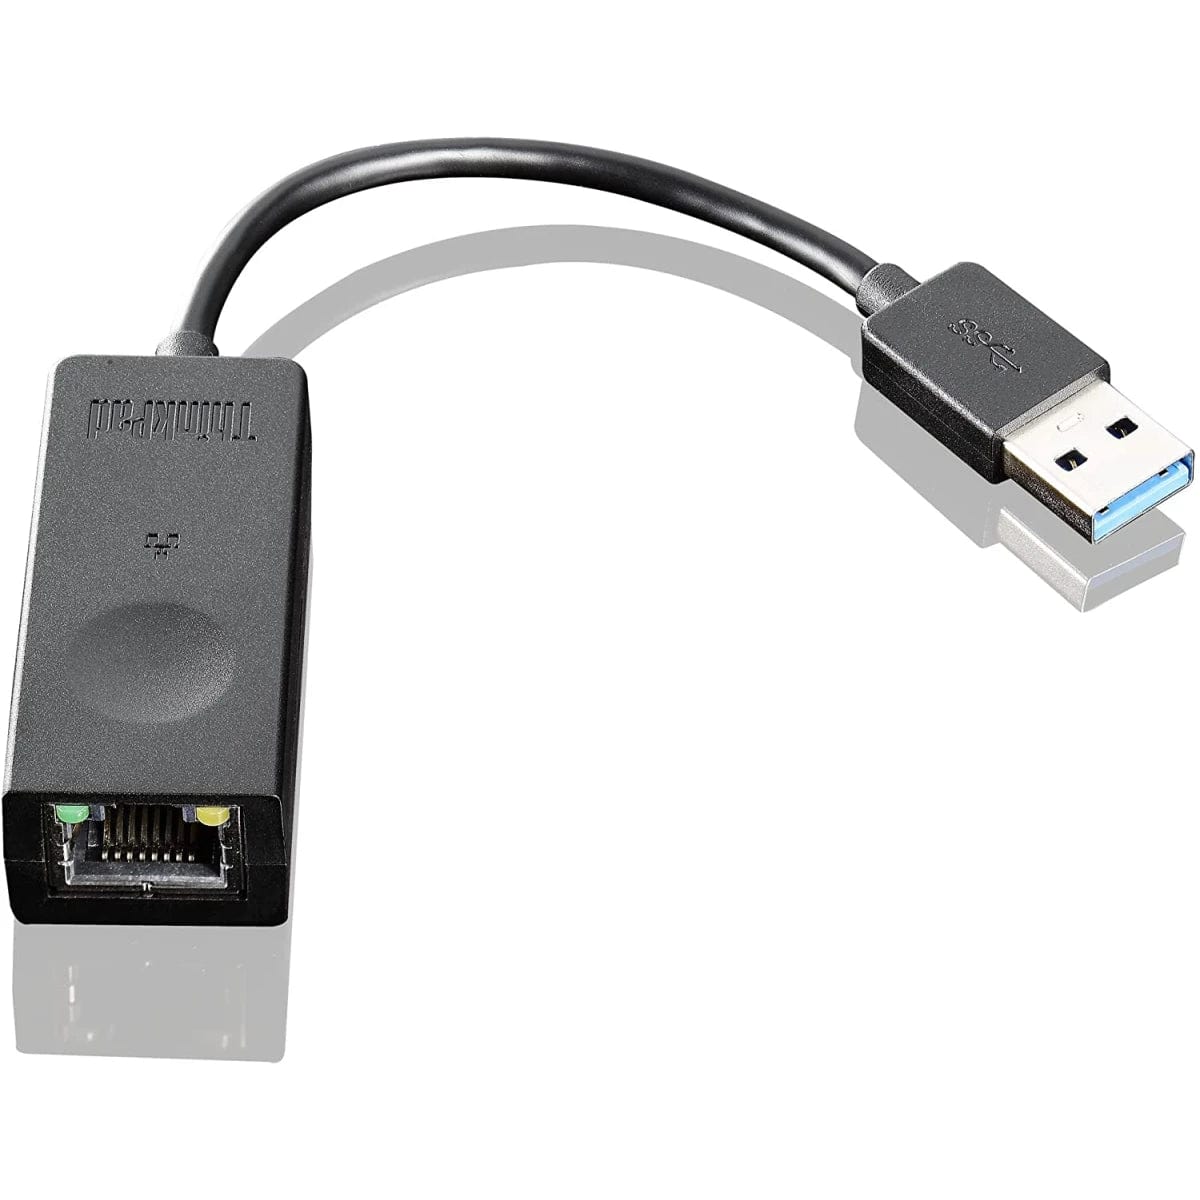 LENOVO CABLES Lenovo Thinkpad USB 3.0 Gigabit Ethernet Adapter Full-Duplex Flow Control 4X90S91830